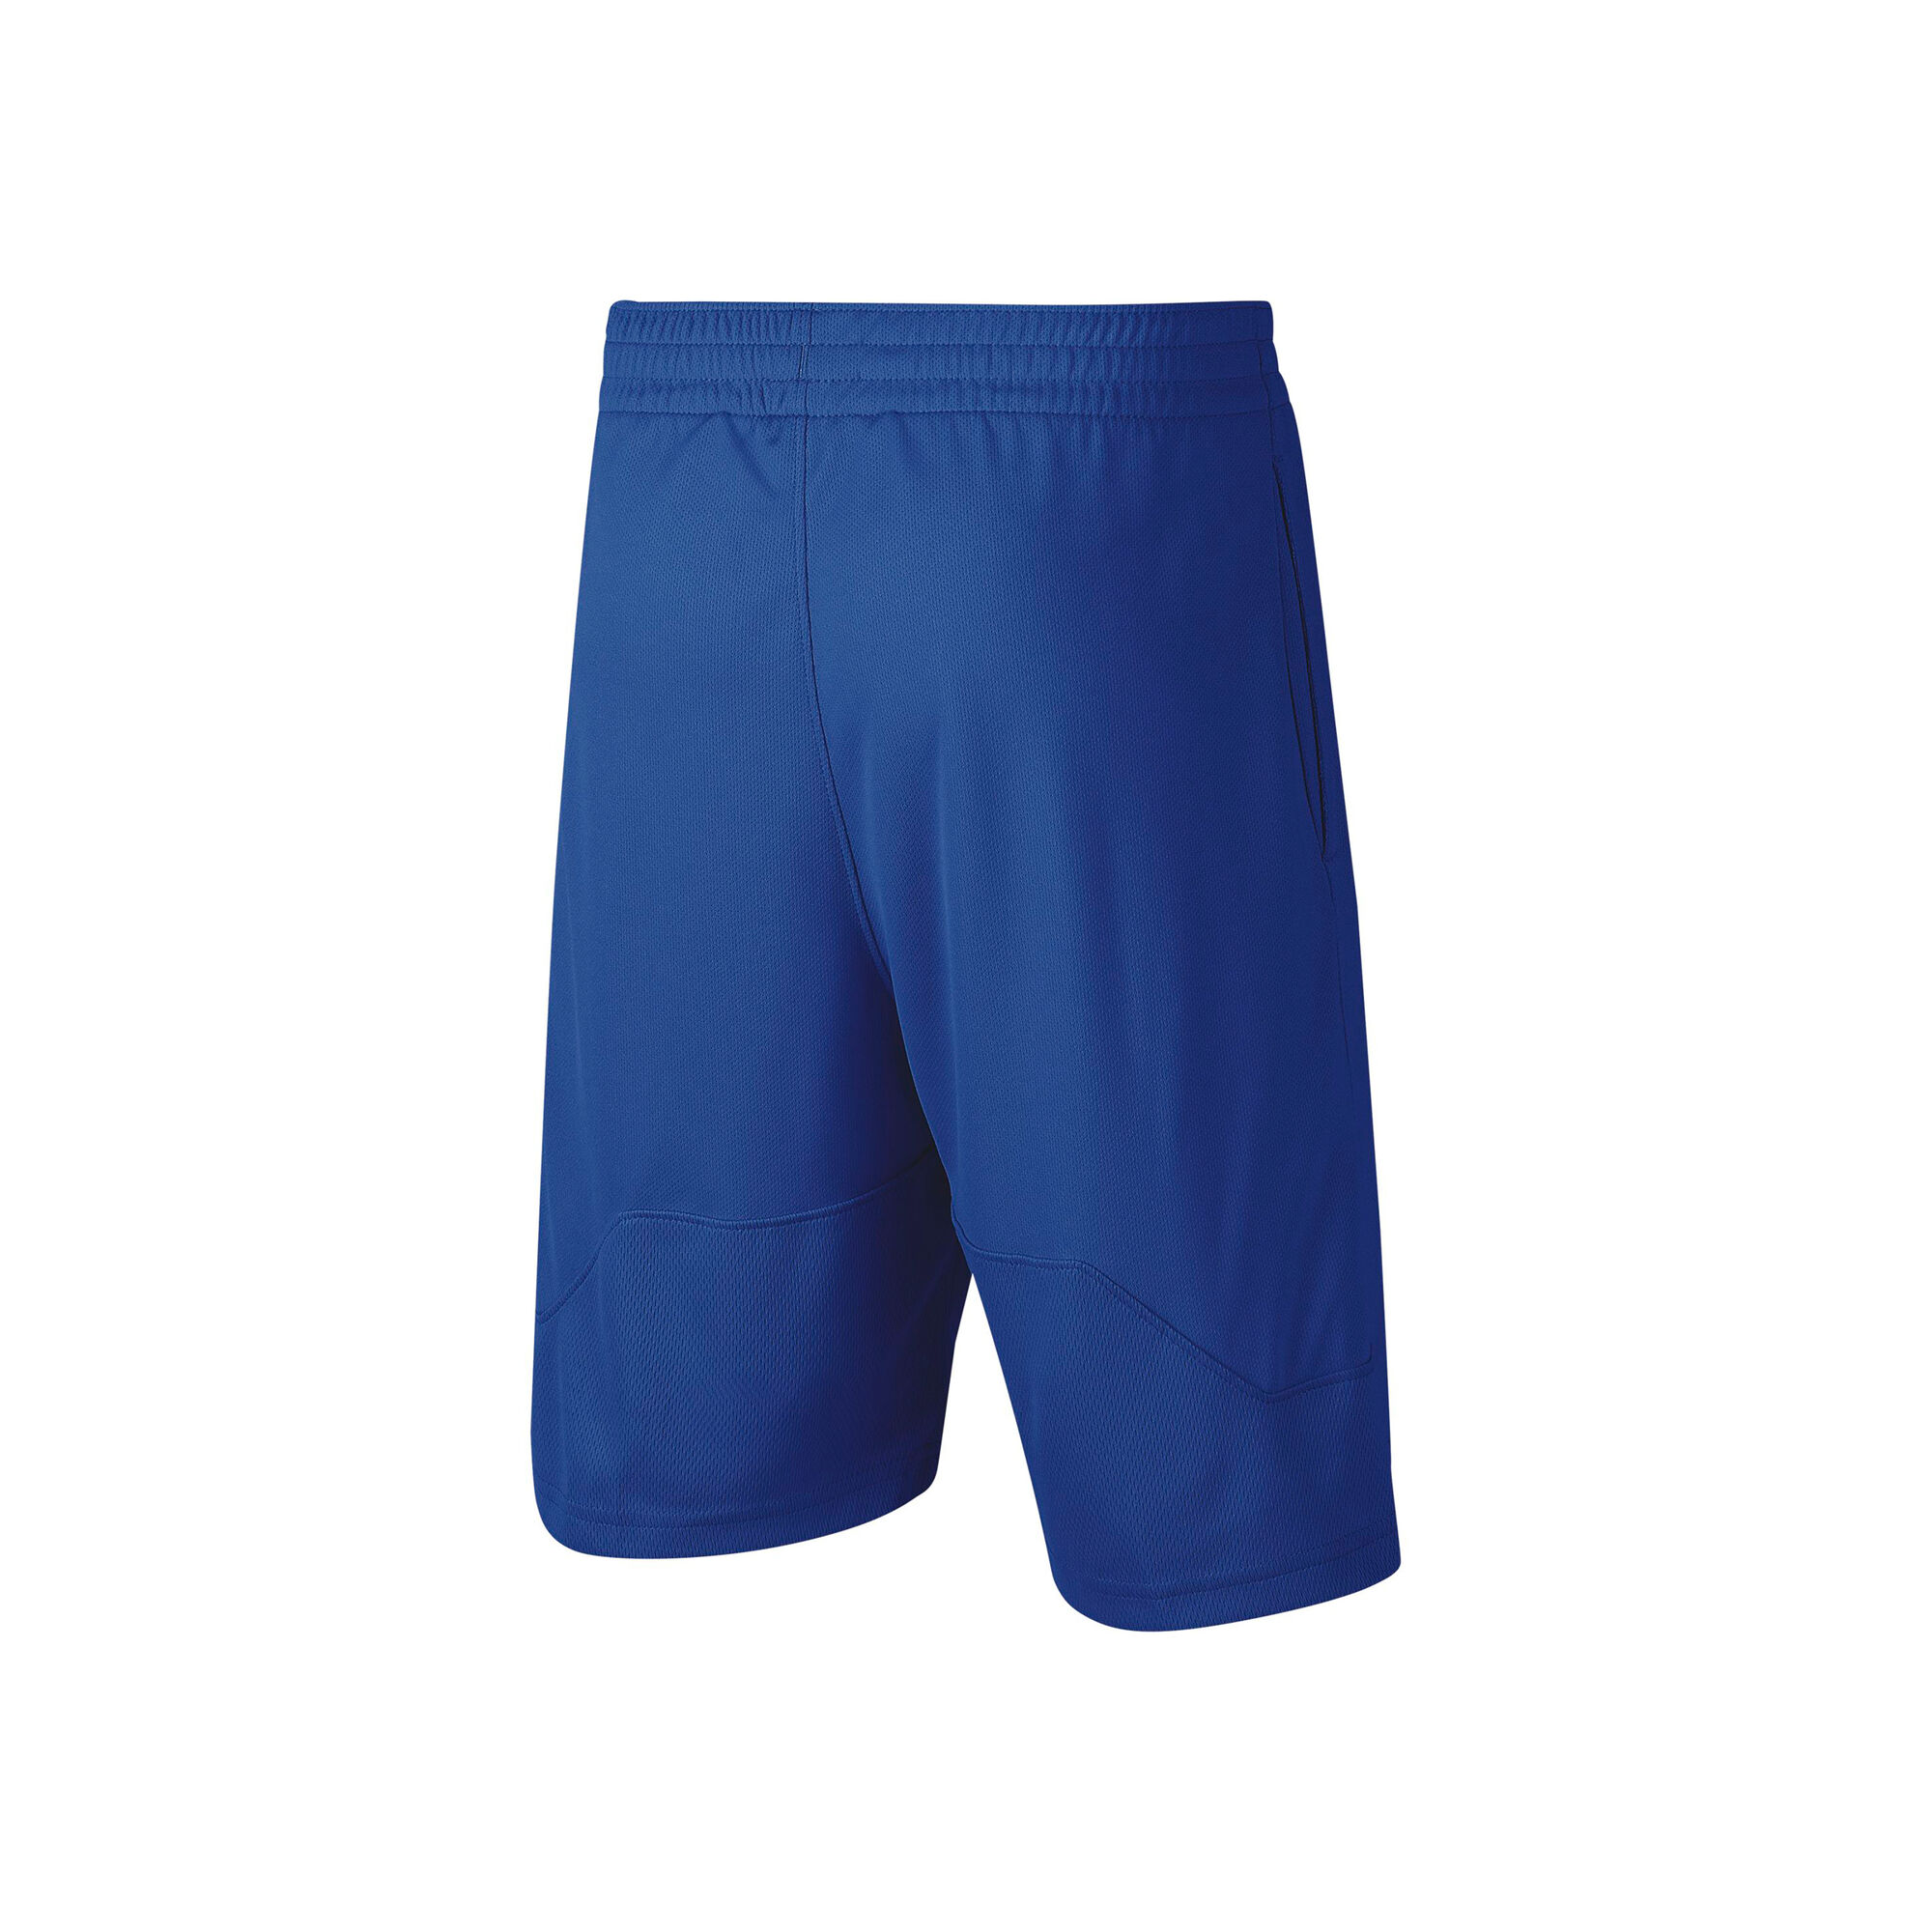 buy Nike Dri-Fit Shorts Boys - Blue, White online | Tennis-Point